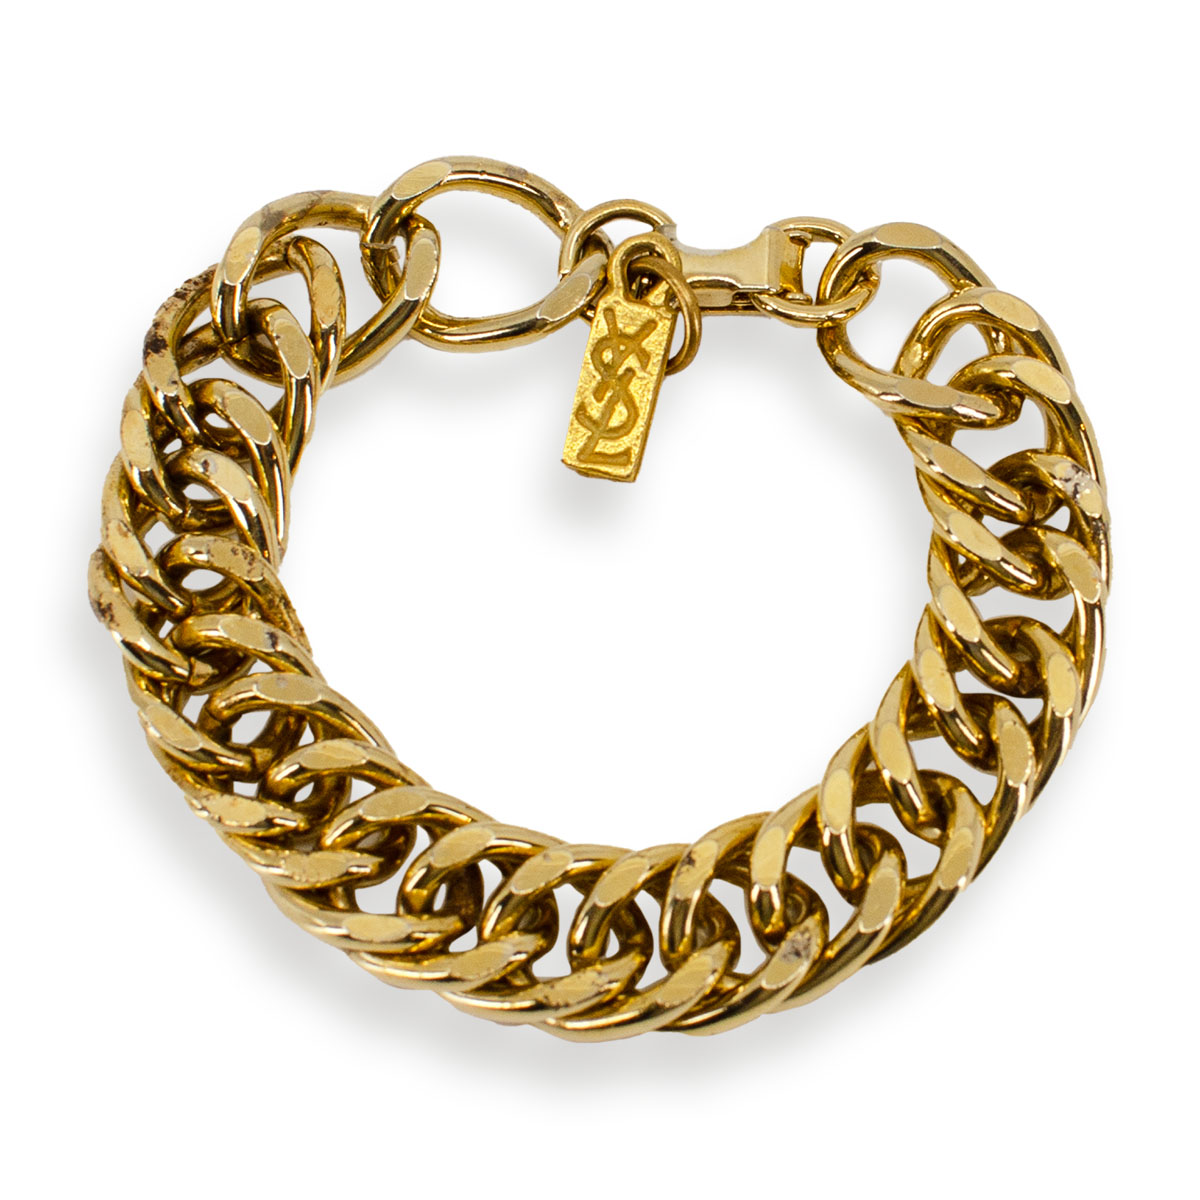 YSL curb chain bracelet, yves saint laurent jewelry